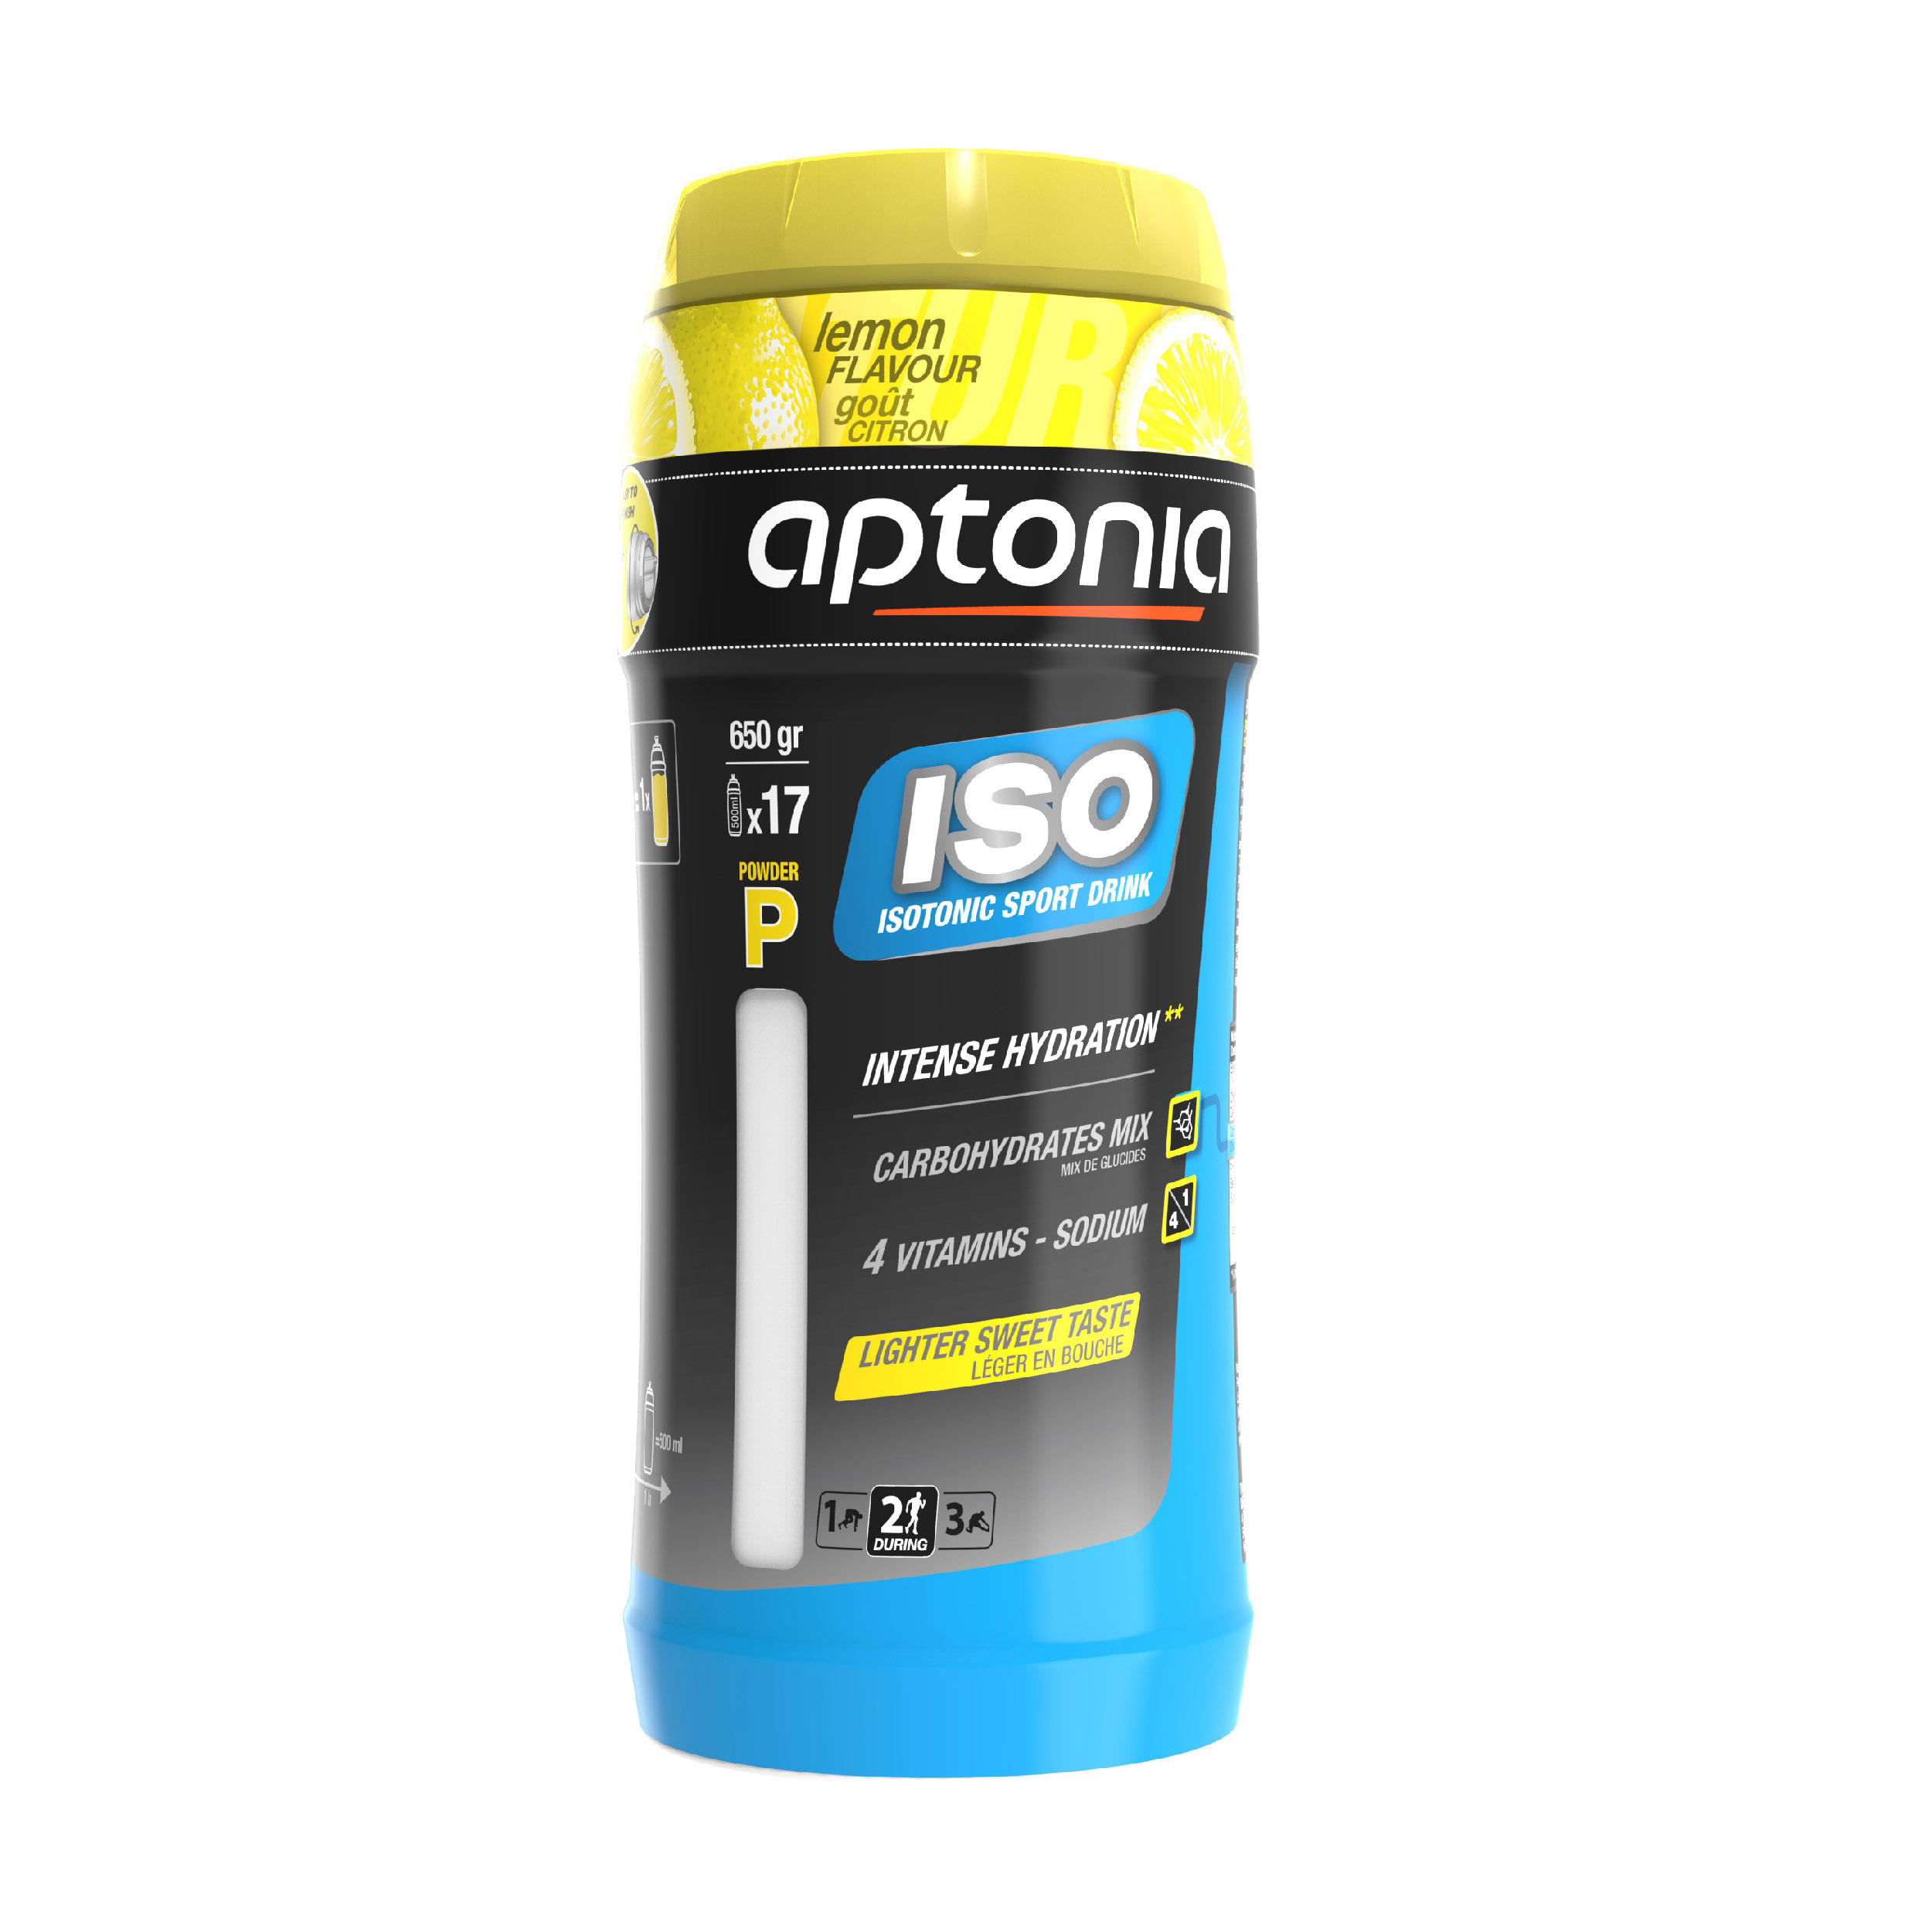 APTONIA ISO Isotonic Drink Powder 650g - Lemon